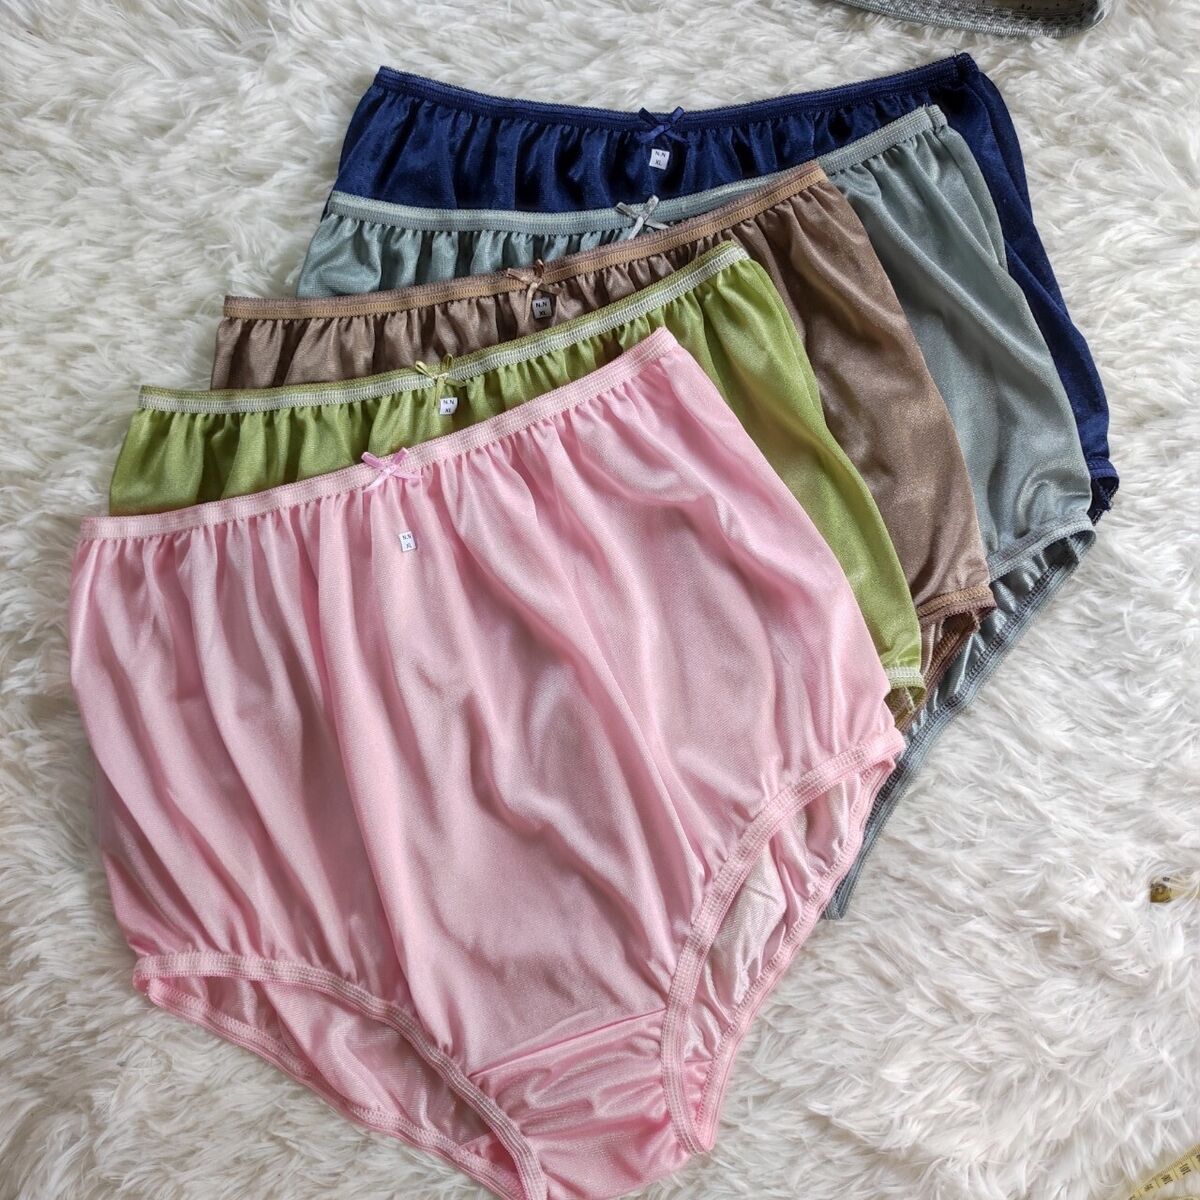 Buy online Grey Nylon Bikini Panty from lingerie for Women by Legit Affair  for ₹299 at 40% off